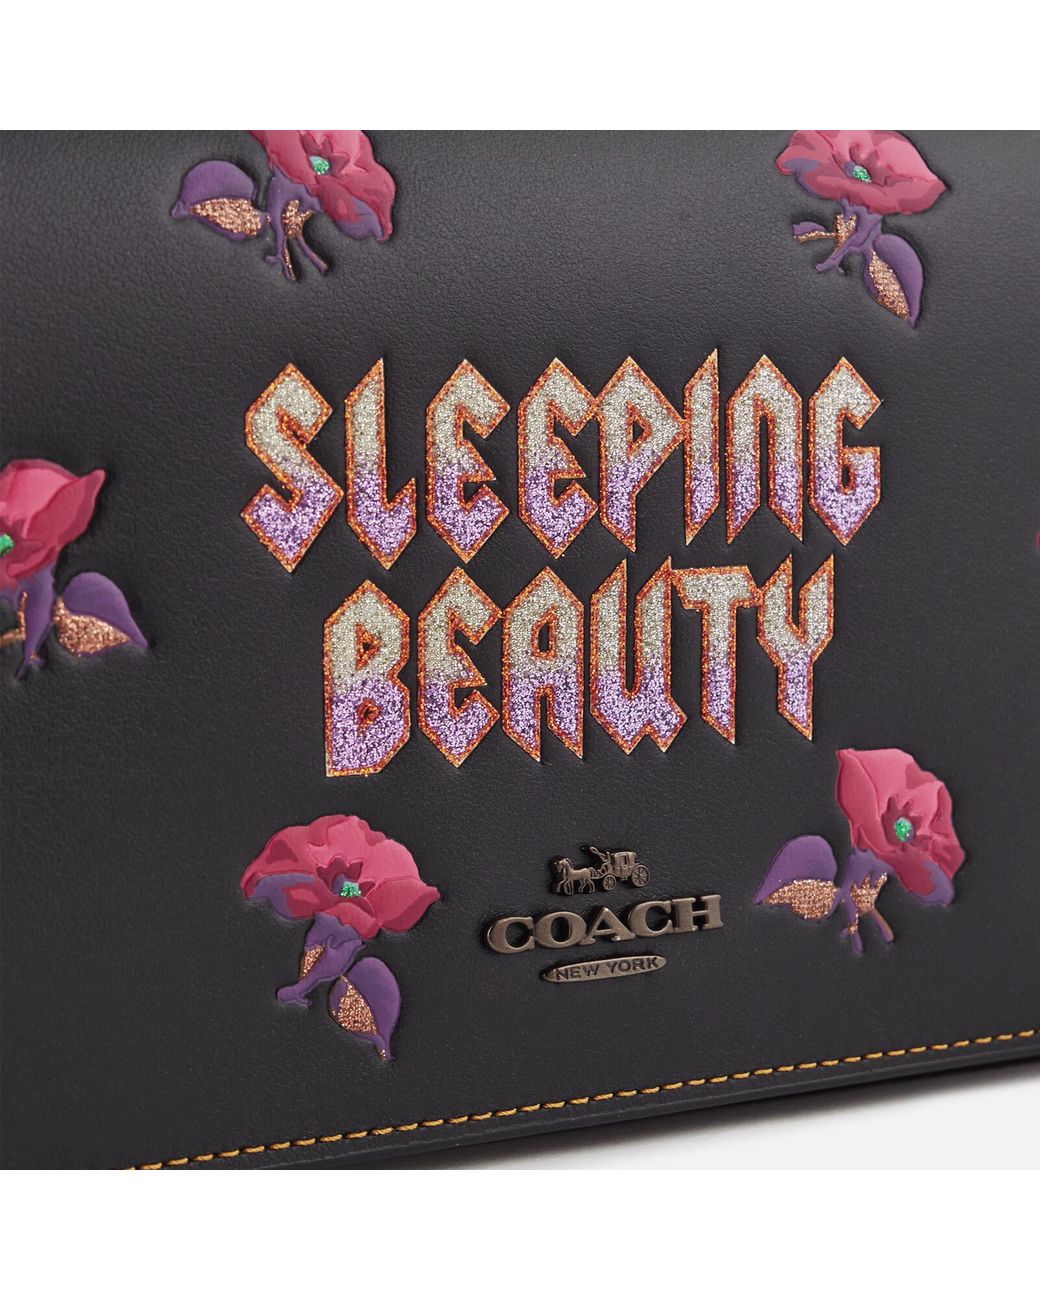 Coach x Disney Sleeping Beauty Tote - Black